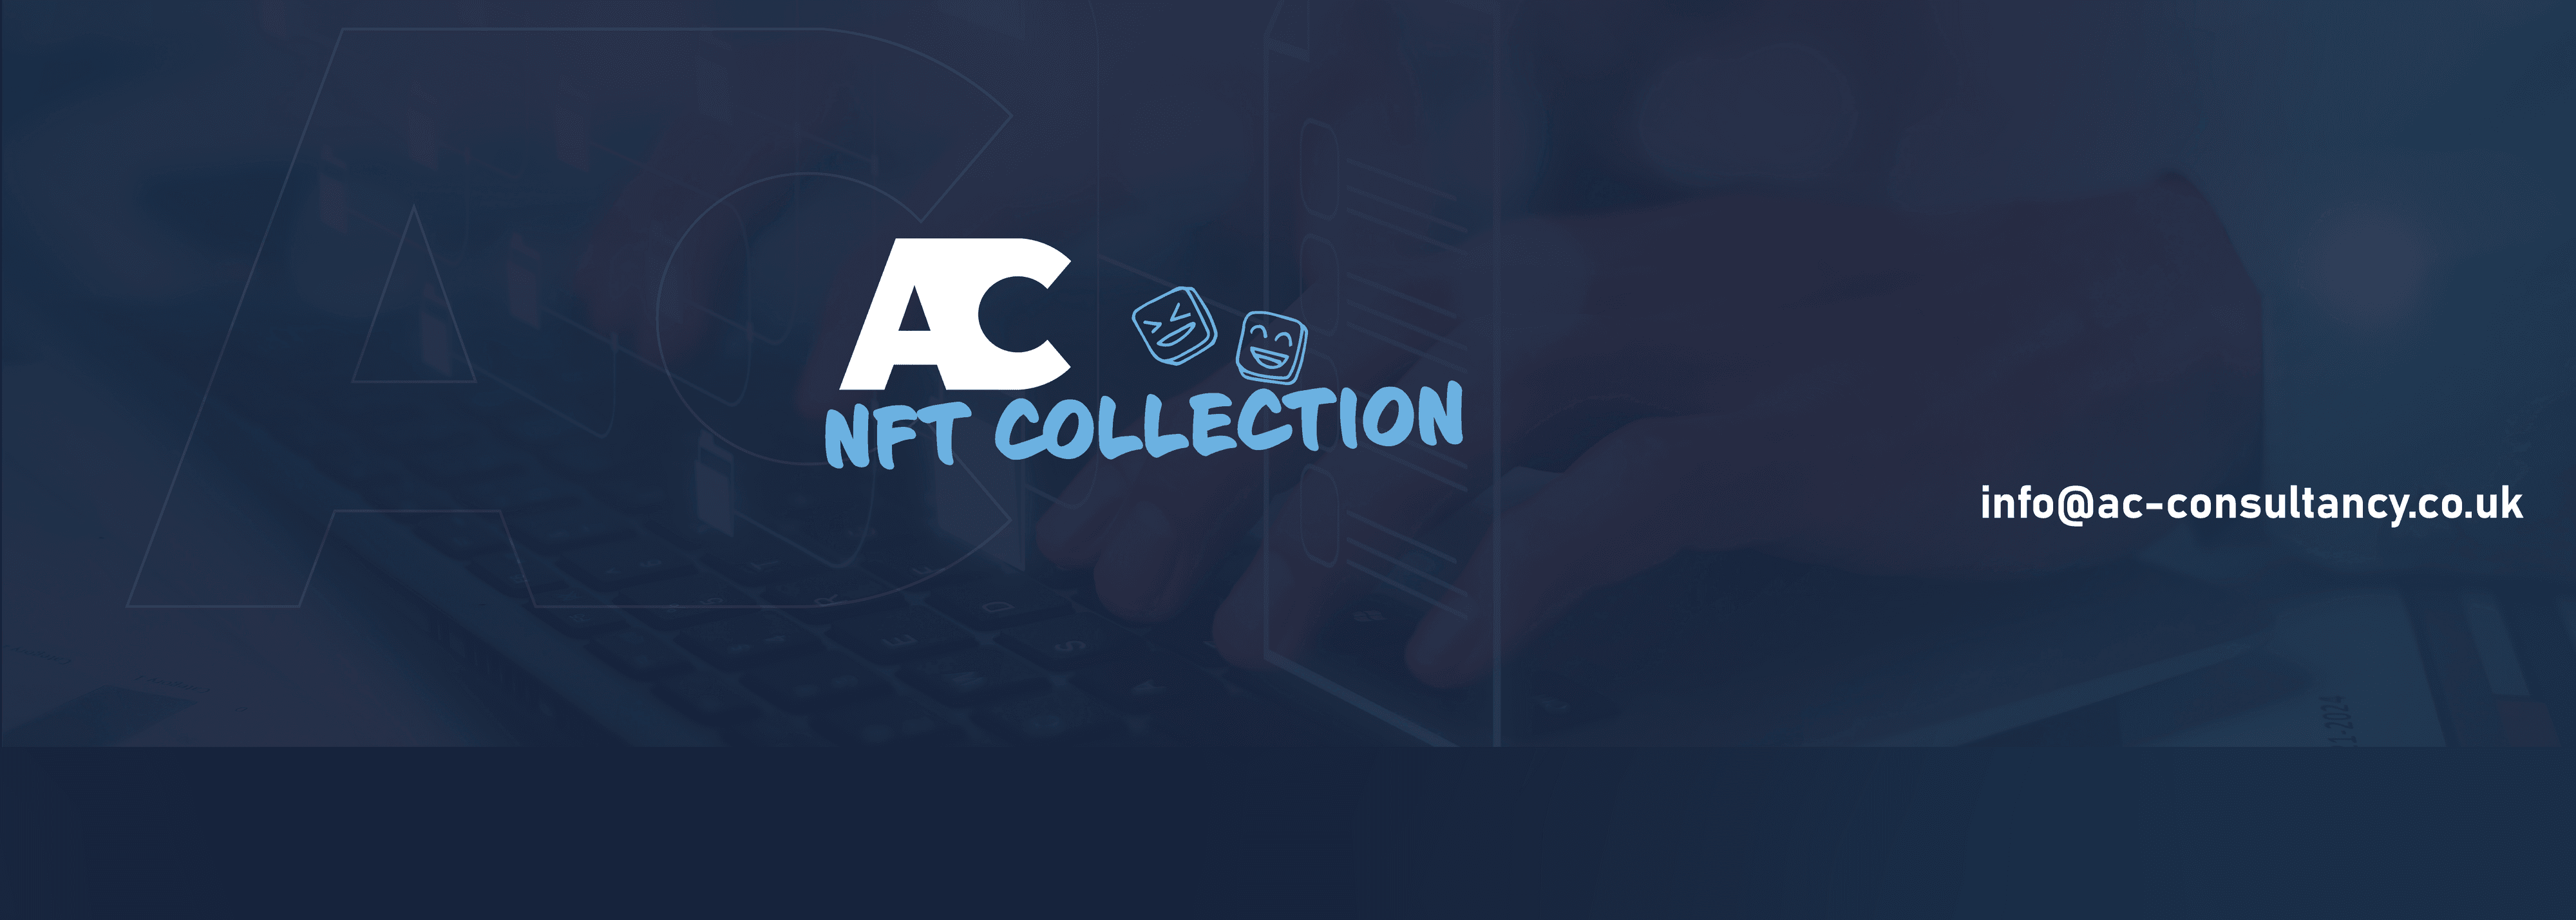 AC_Collection 橫幅